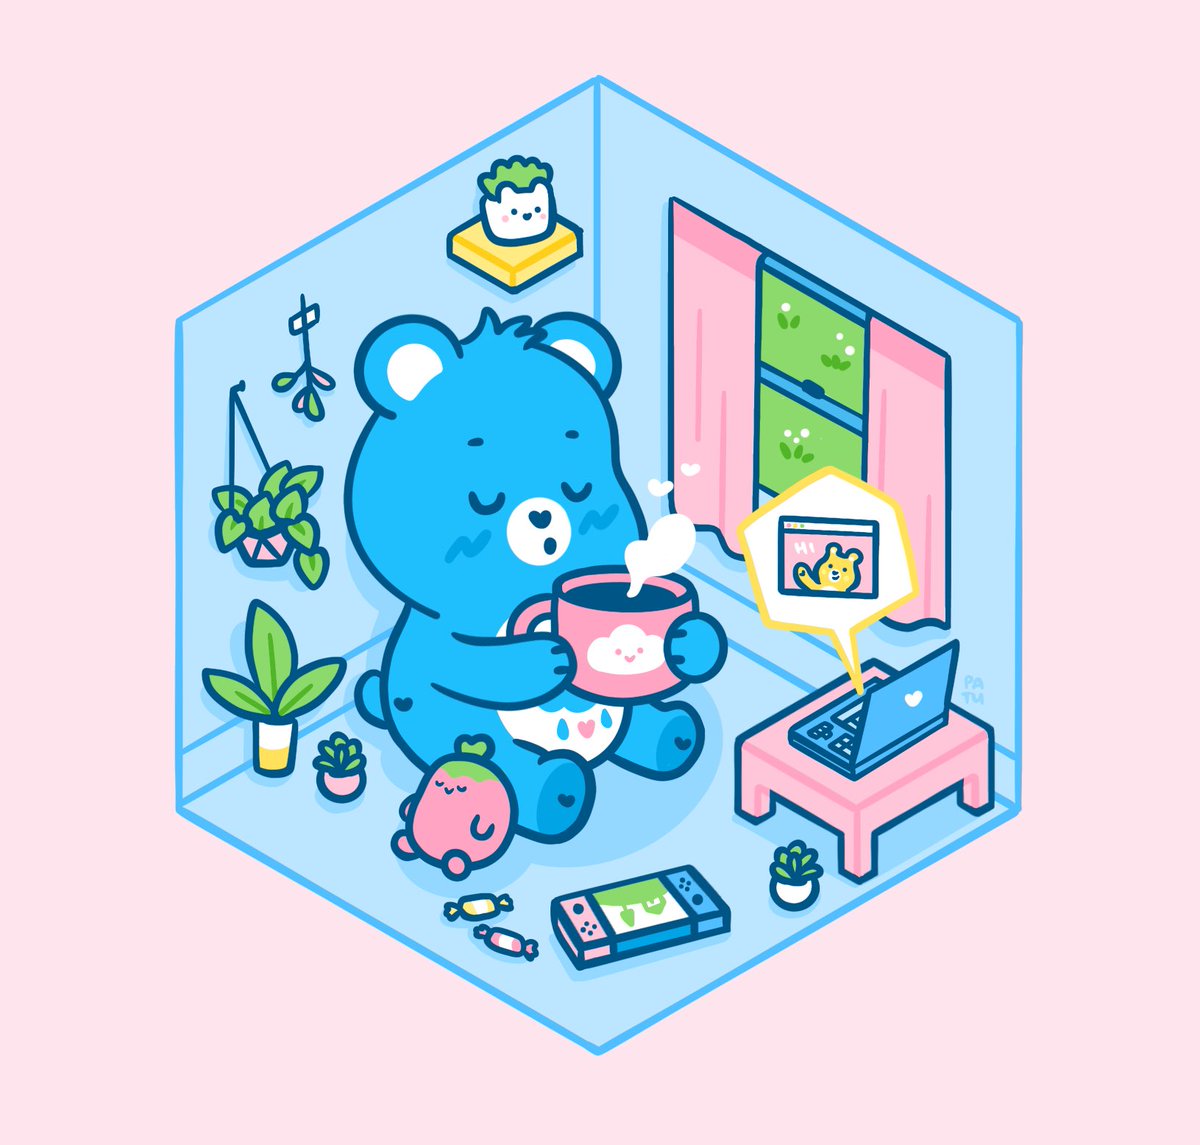 sad bear care bear